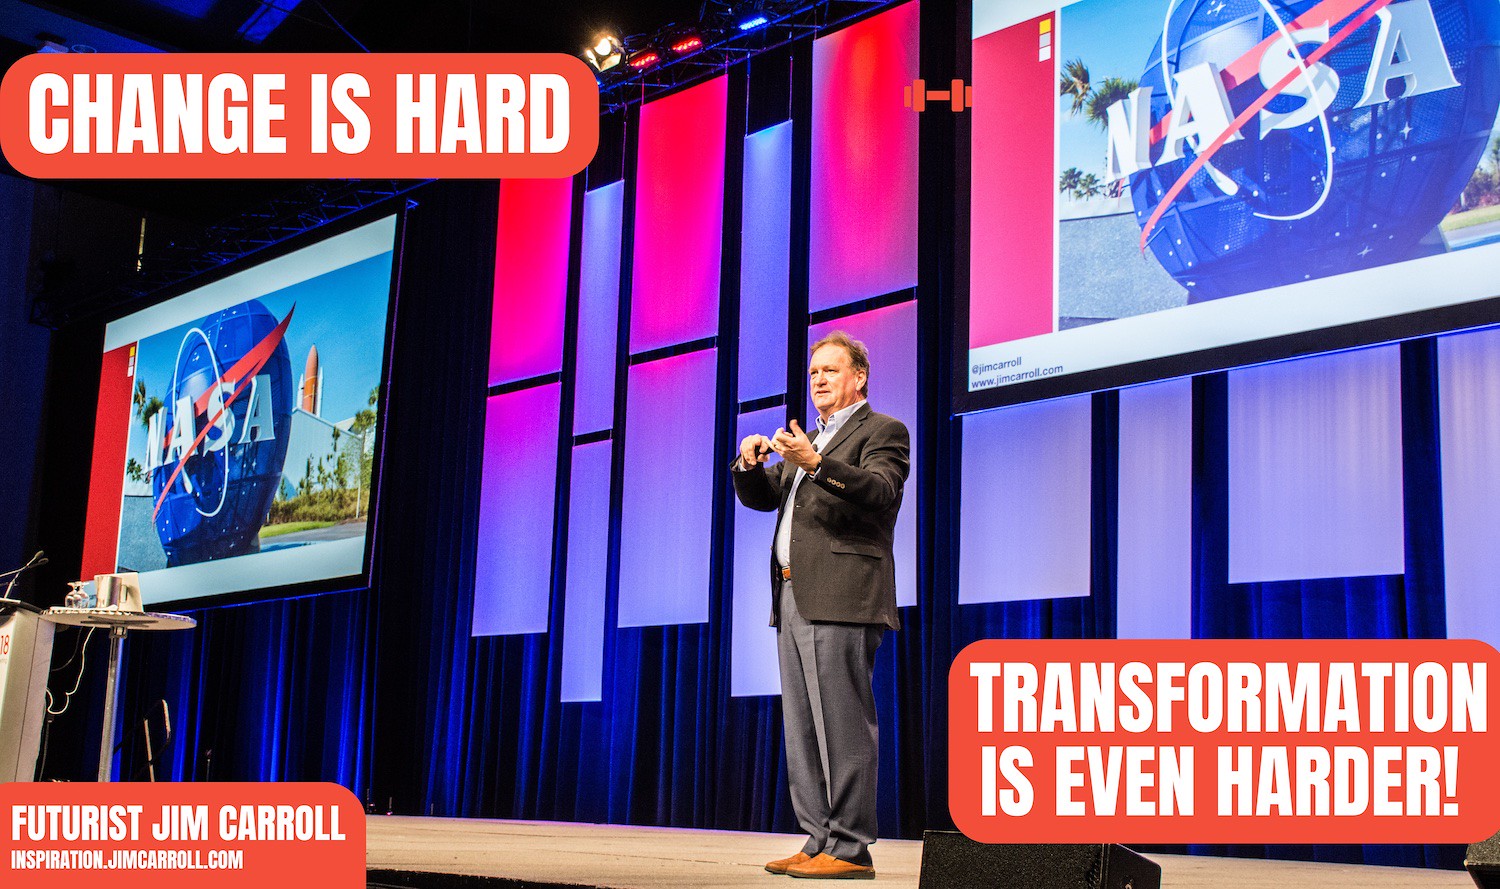 "Change is hard. Transformation is even harder!" - Futurist Jim Carroll